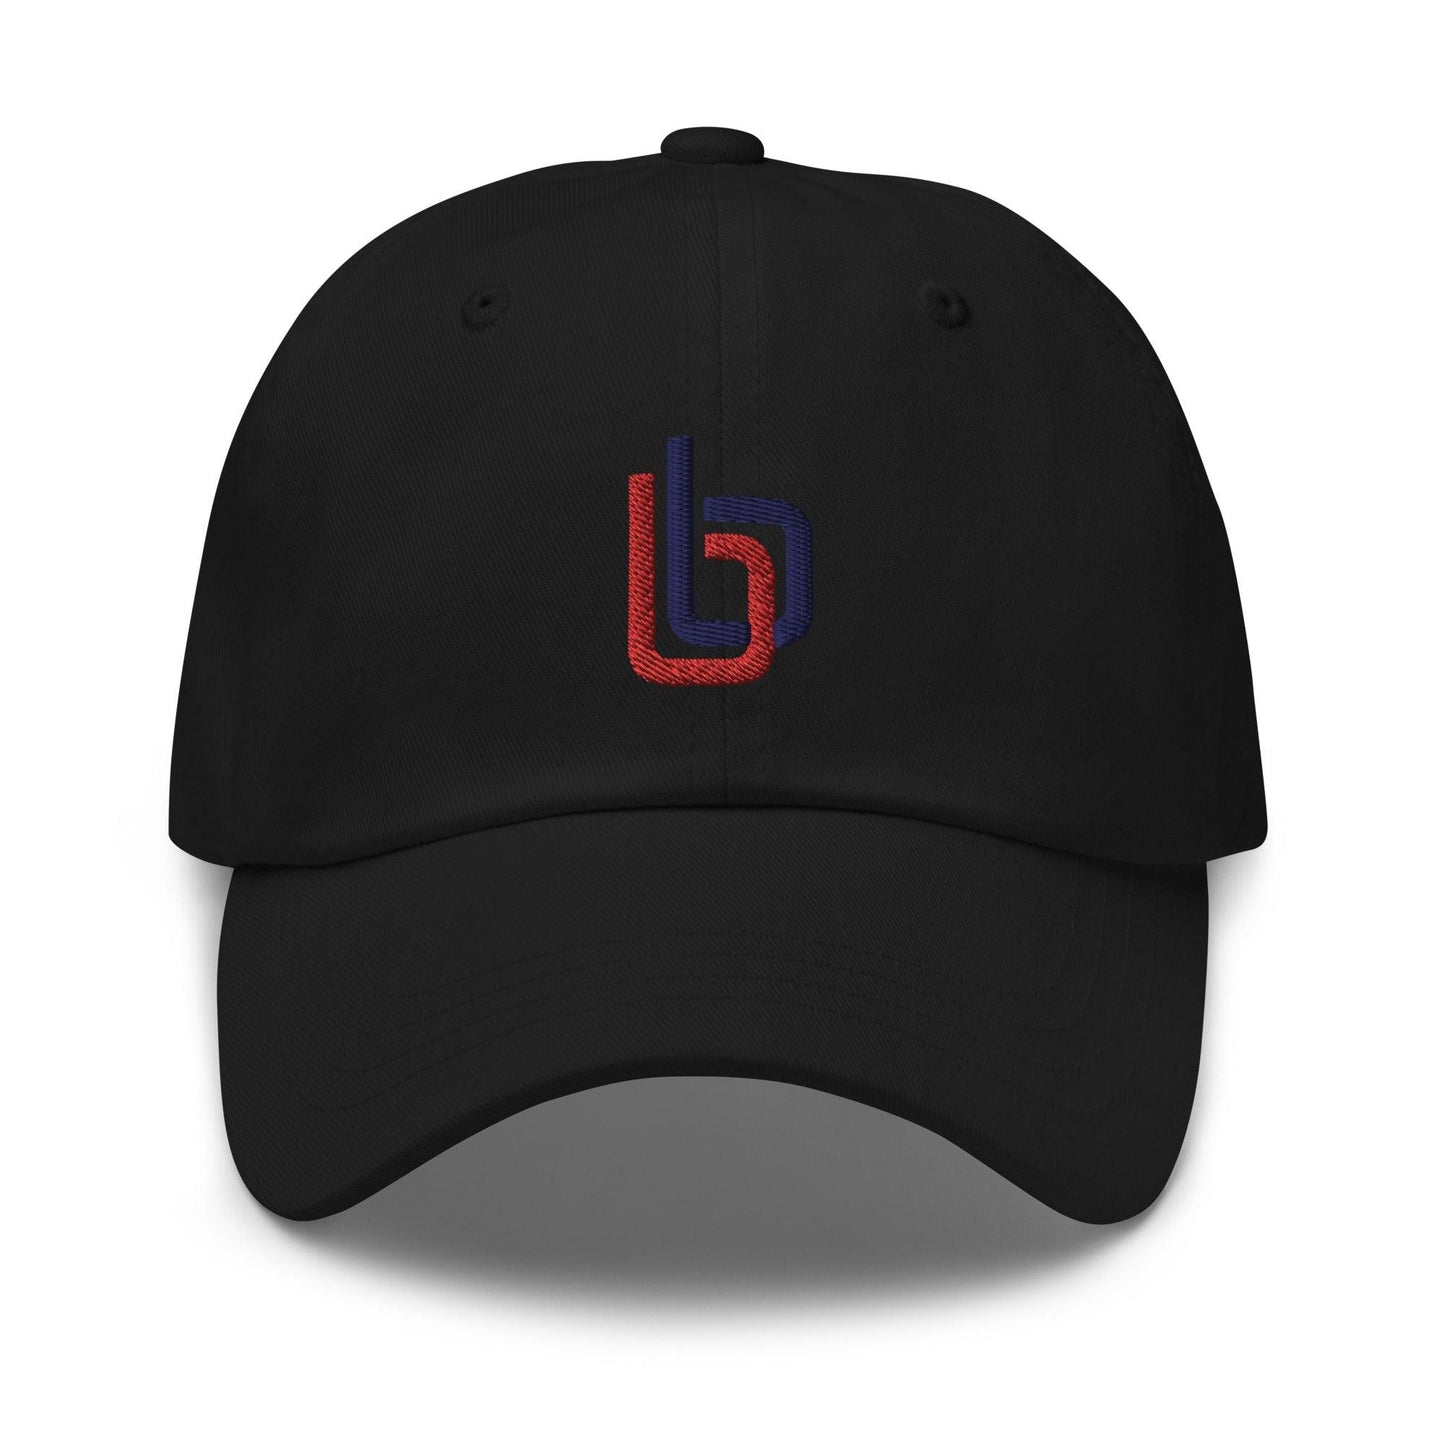 Byron Buxton “Signature” hat - Fan Arch